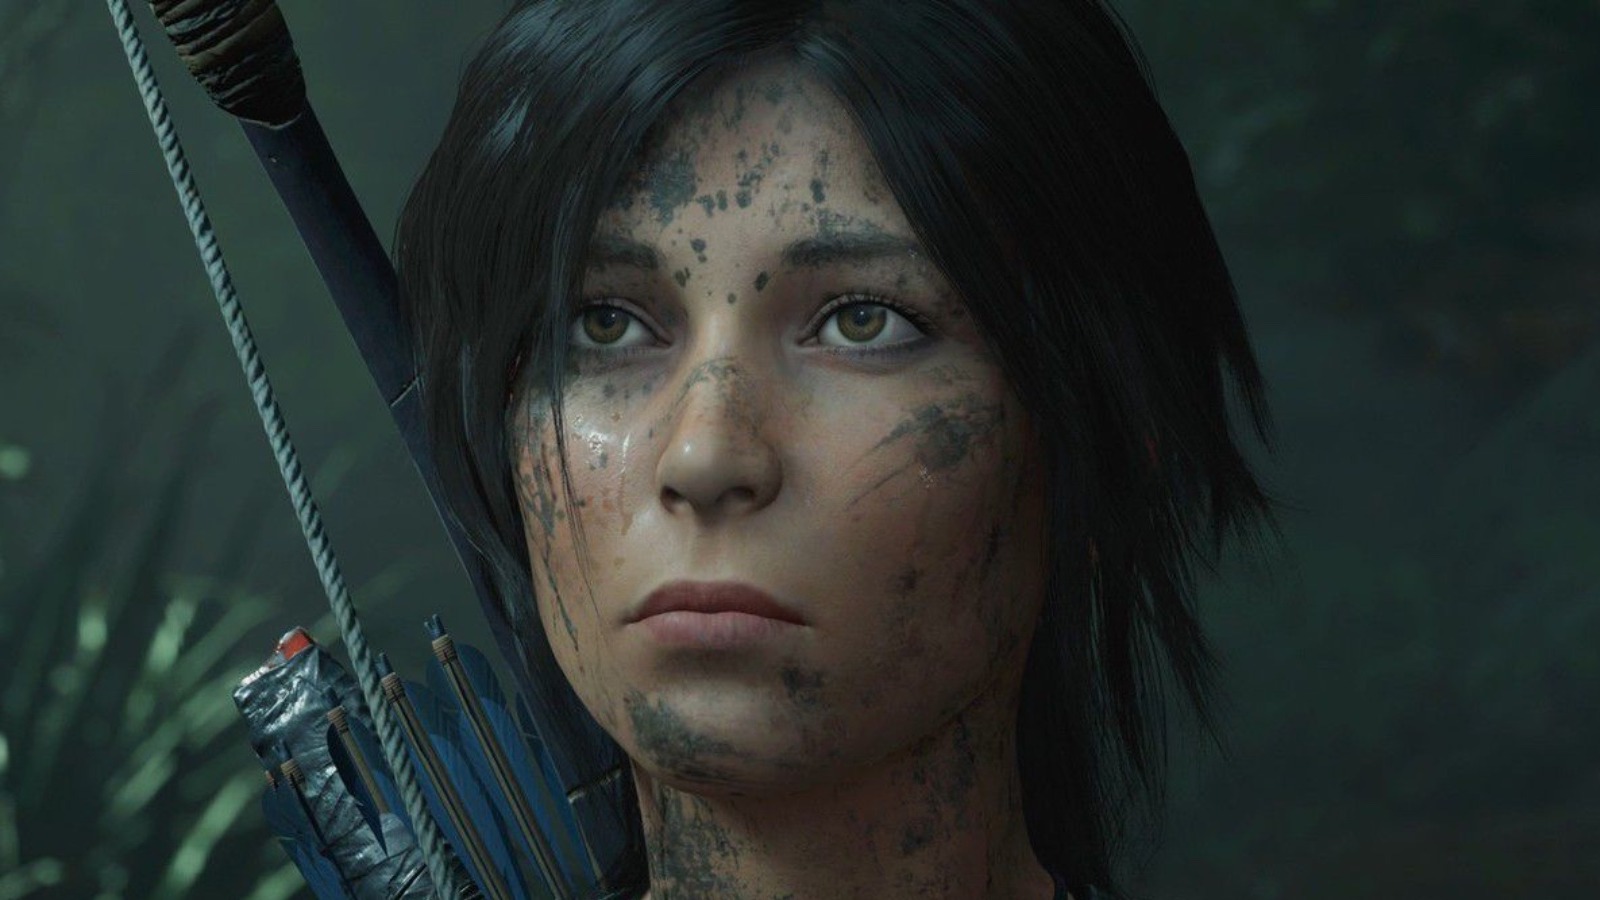 24 Games Similar To Tomb Raider